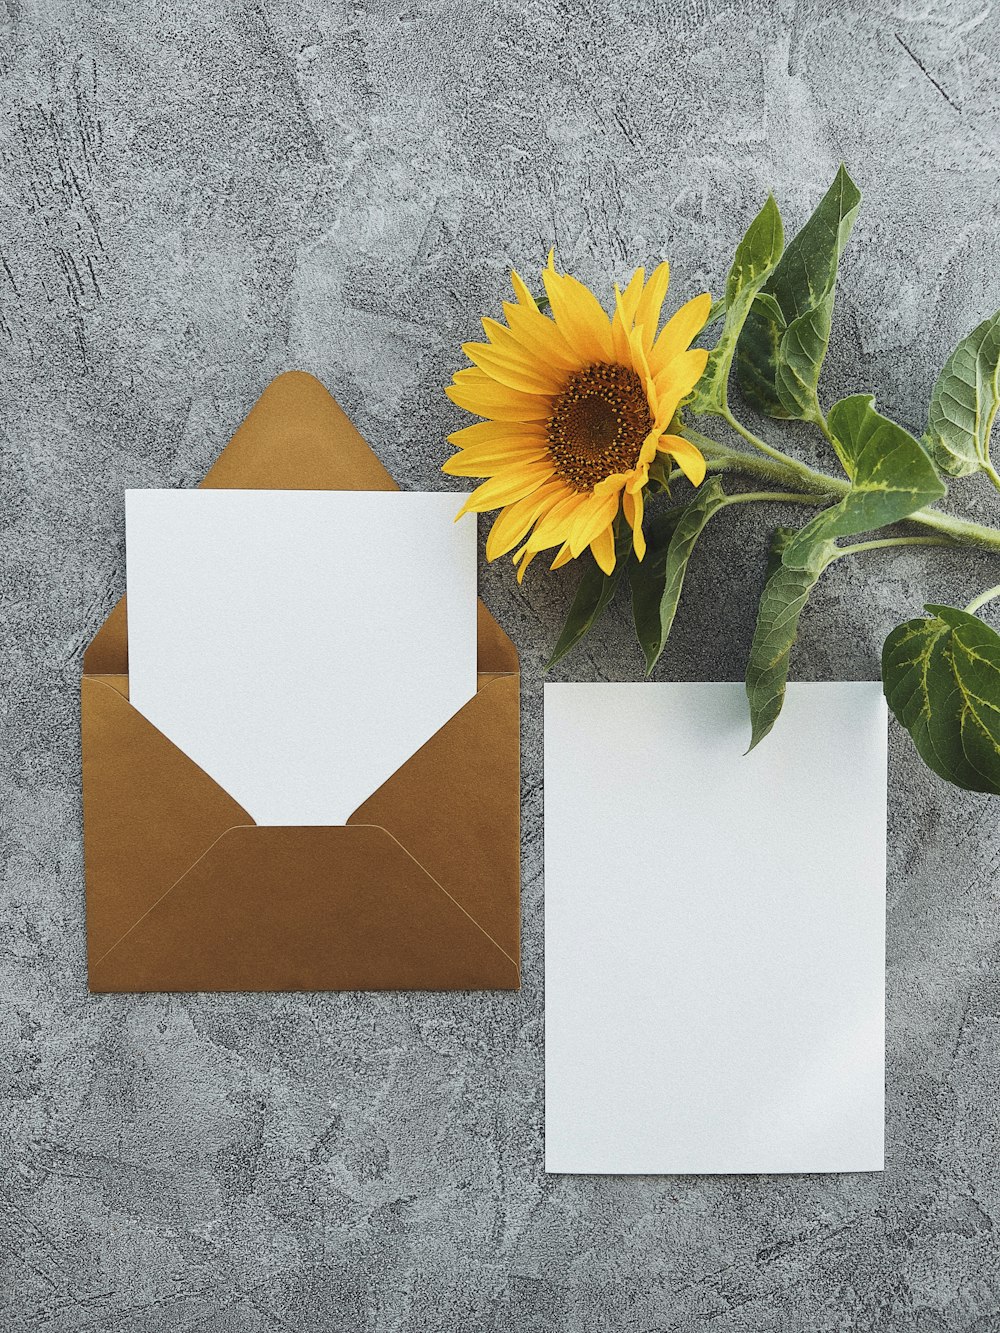 a sunflower and a card on a table